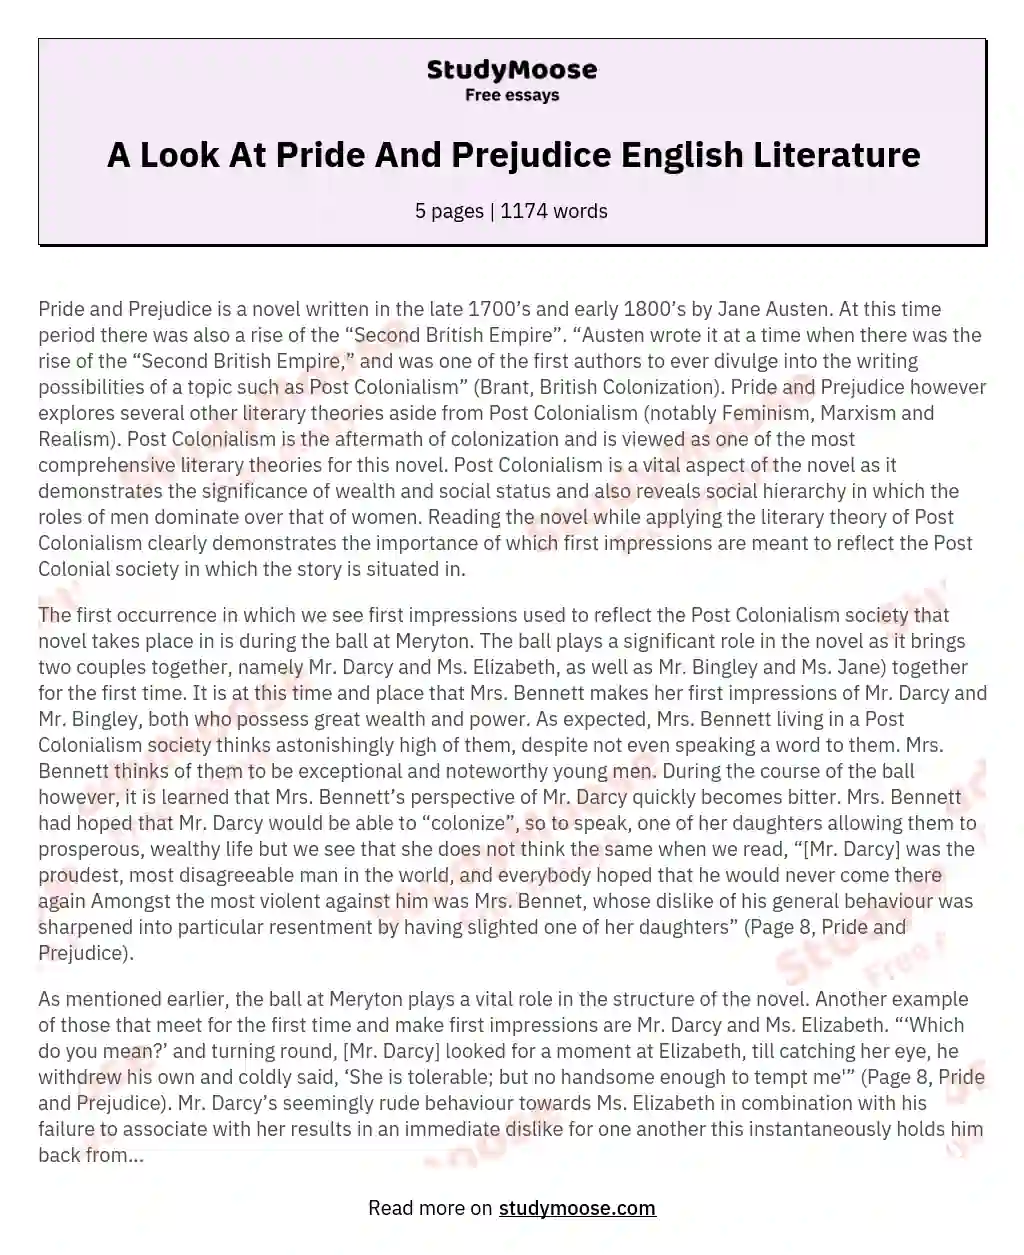 A Look At Pride And Prejudice English Literature essay